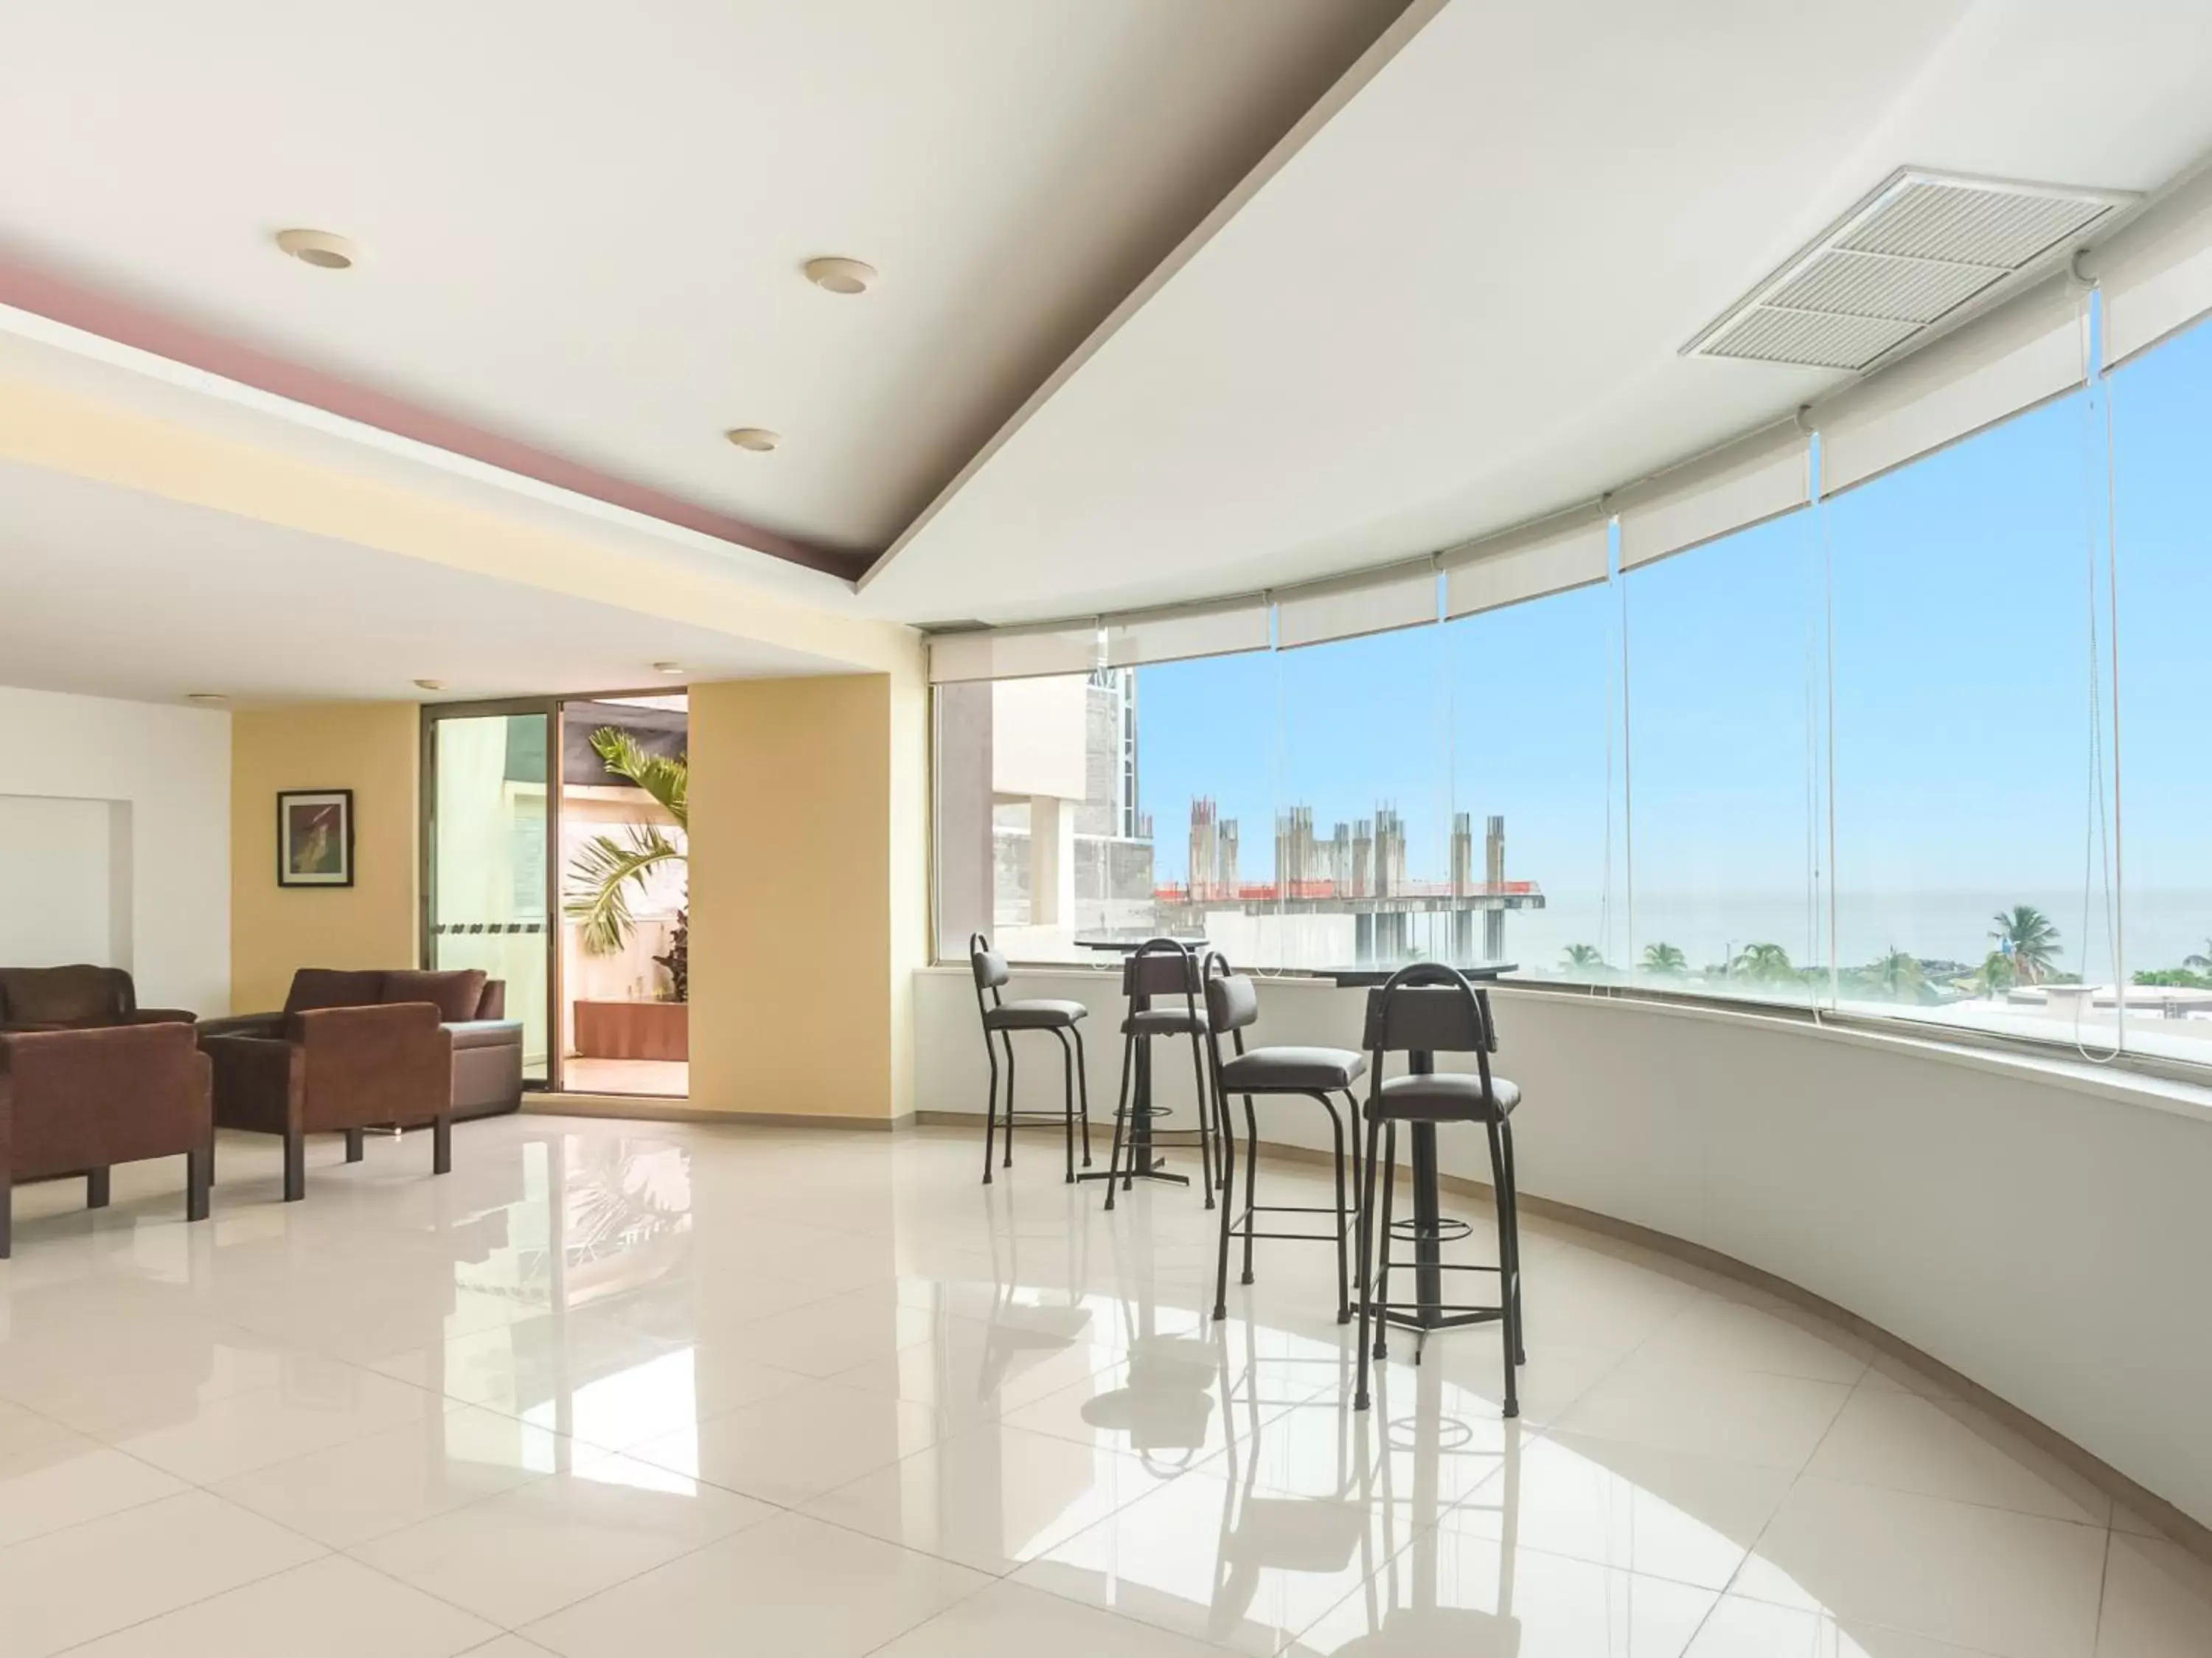 Area and facilities in Veracruz Suites Hotel